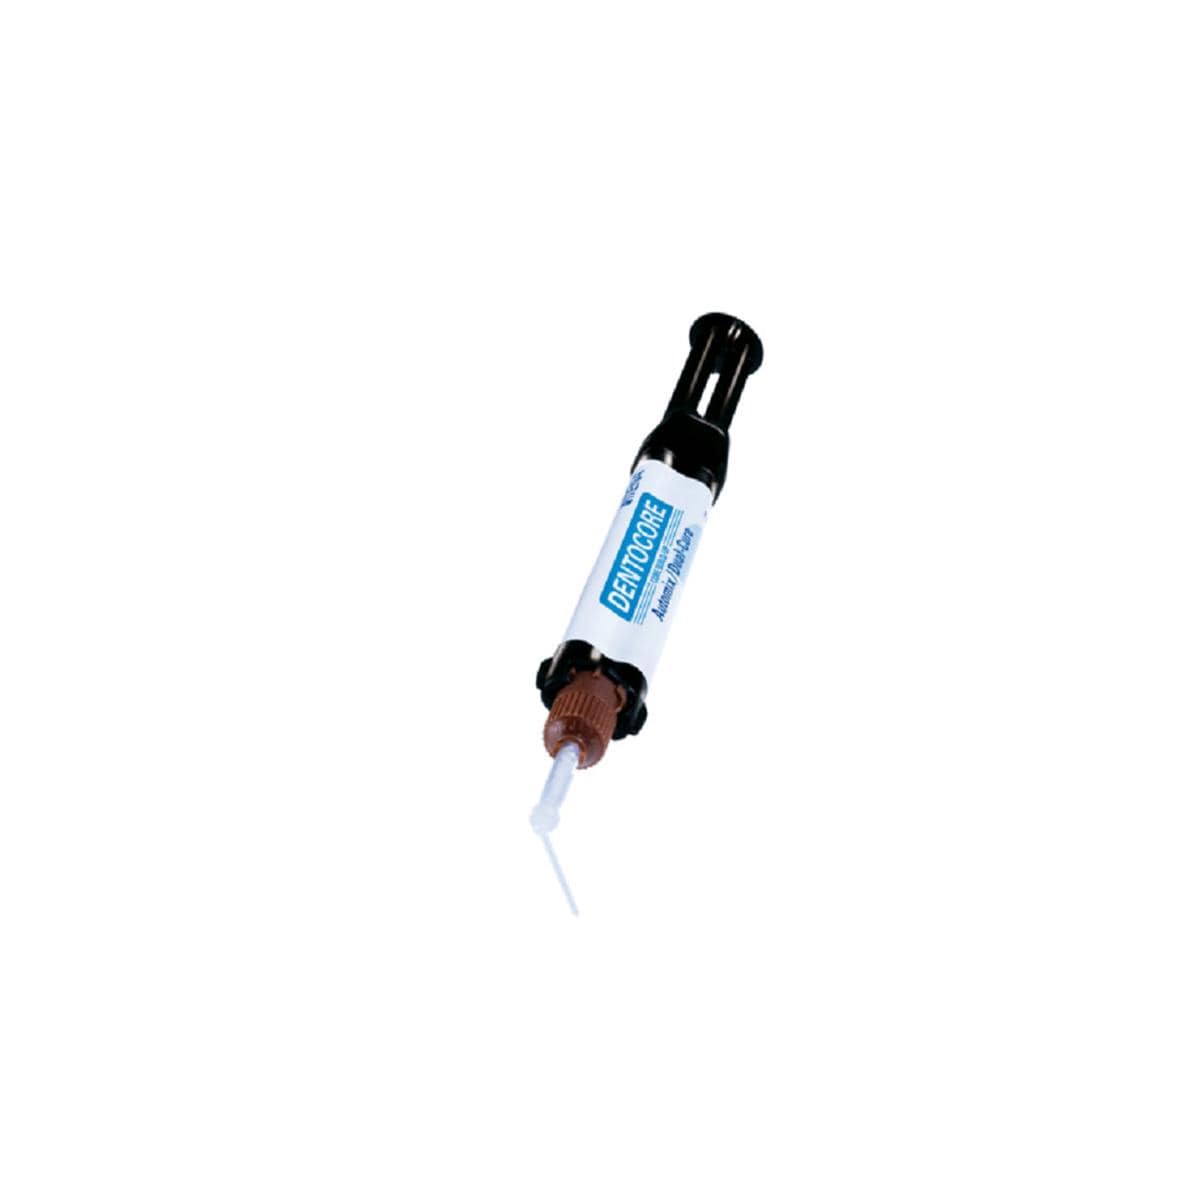 Dentocore syringe - Body A3, 9 g (5 ml)